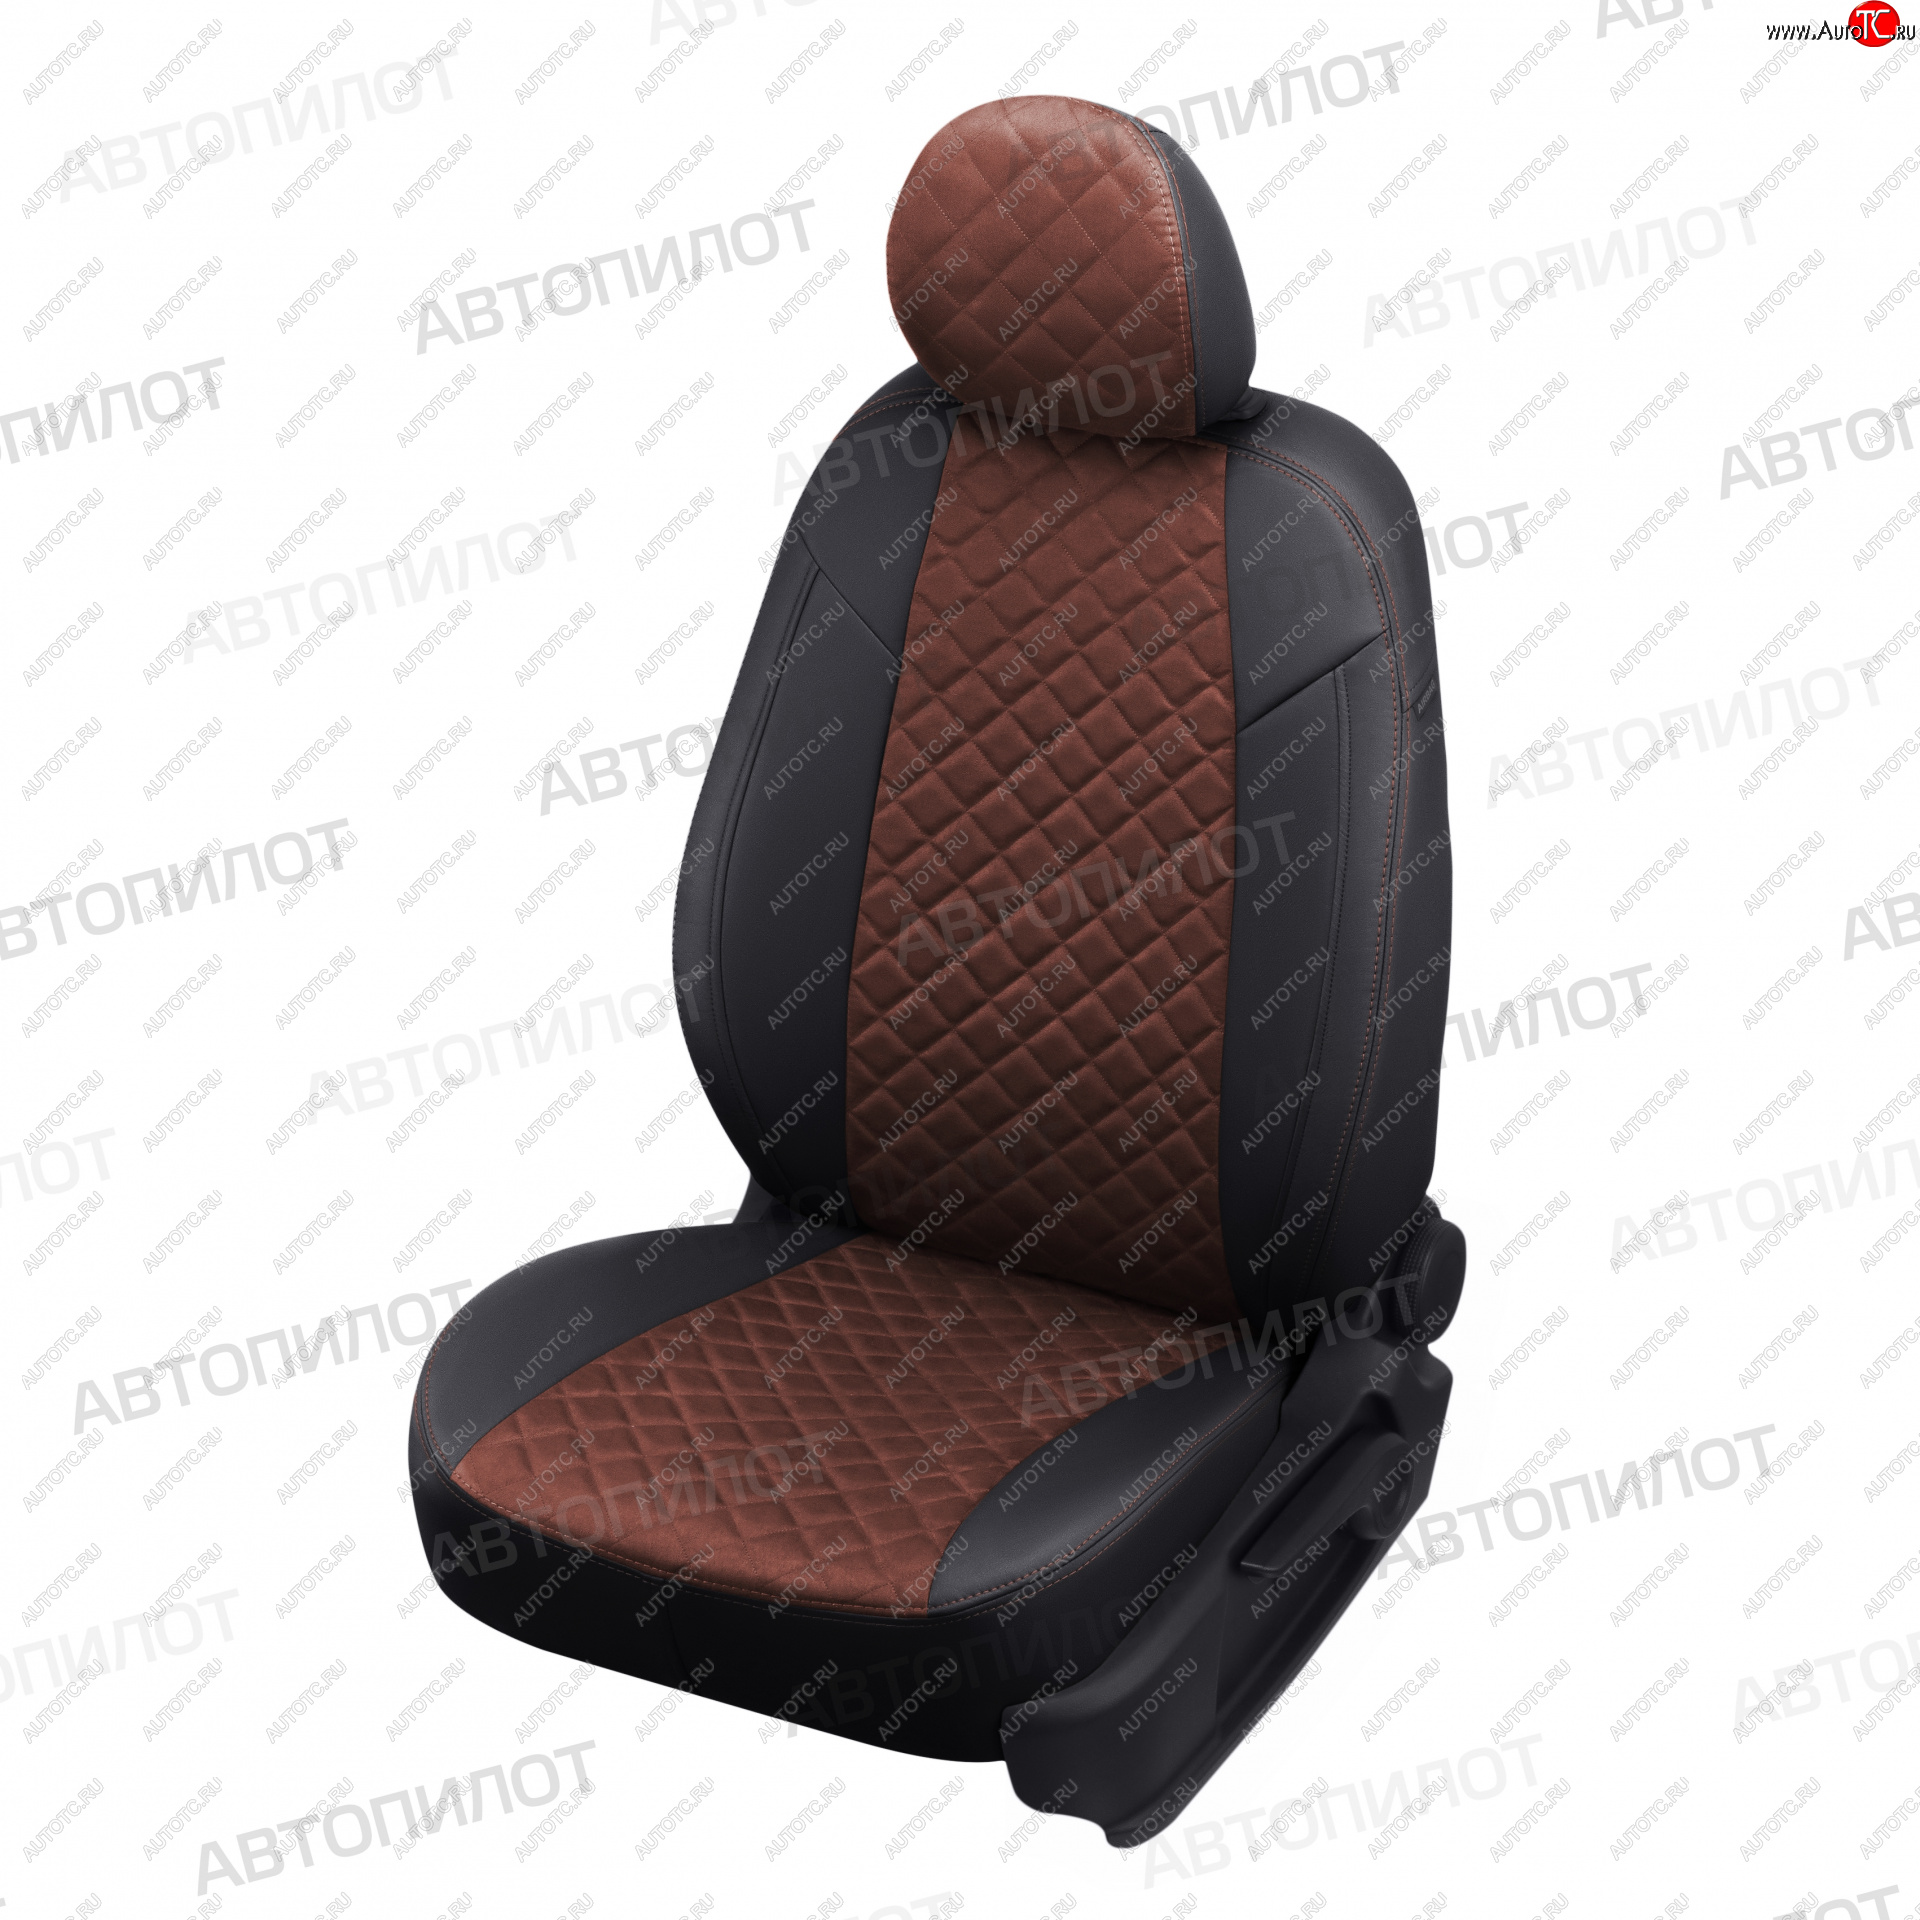 13 999 р. Чехлы сидений (экокожа) Автопилот Ромб  KIA Rio  2 JB (2005-2011) (черный/шоколад)